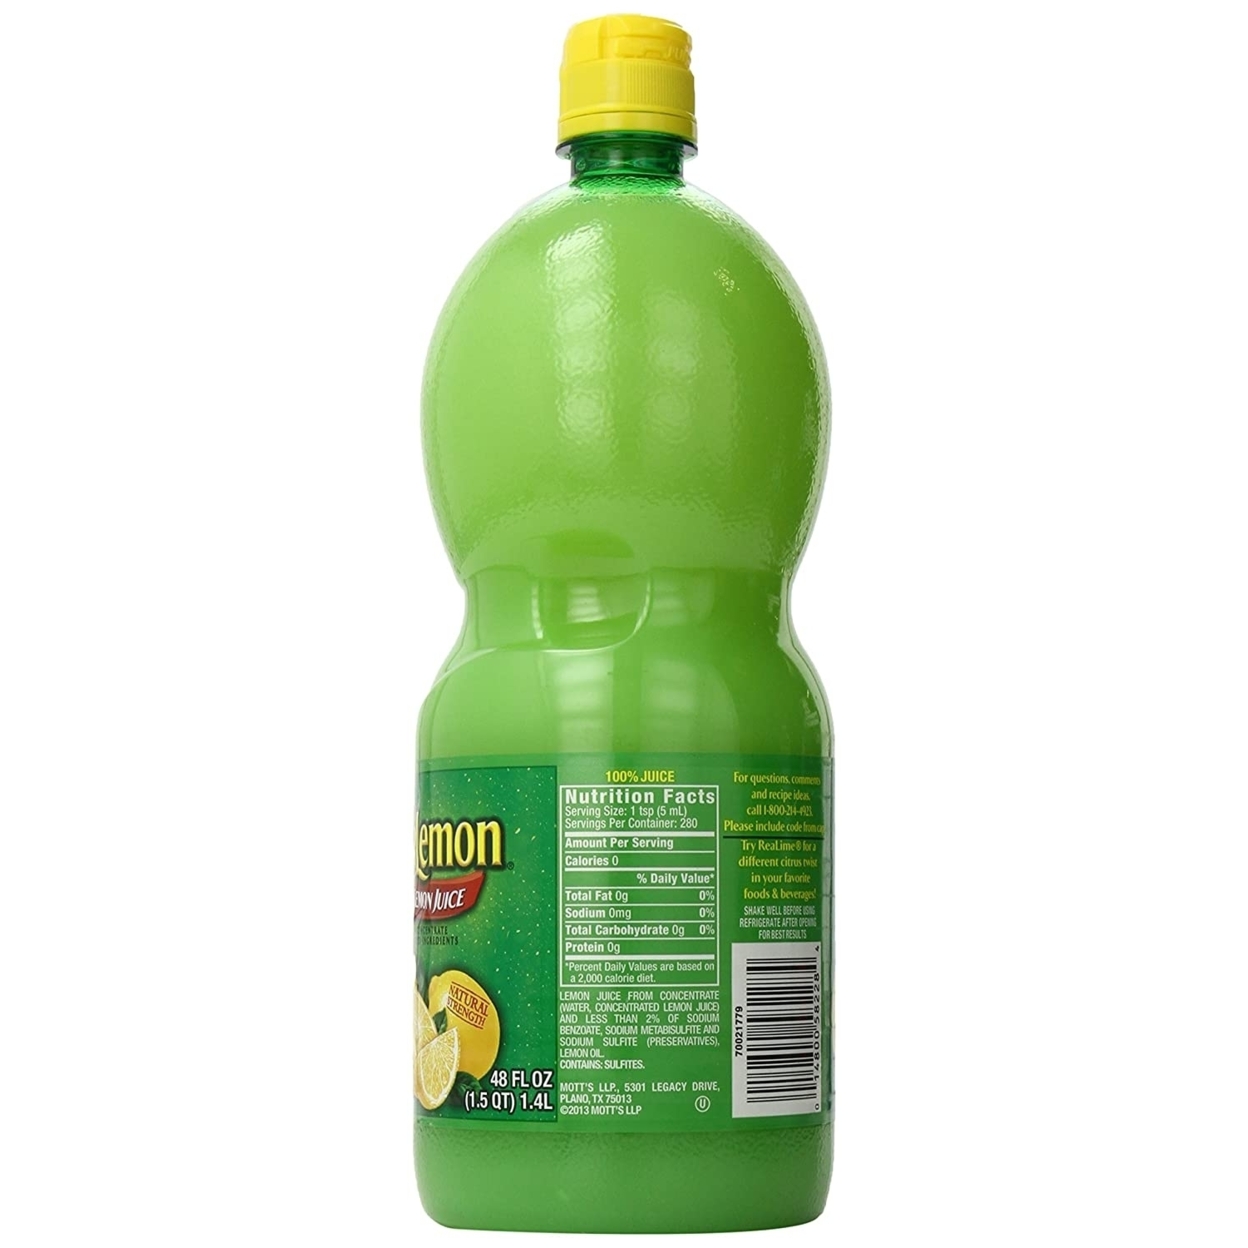 ReaLemon 100% Lemon Juice - 2/48 Ounce Bottles